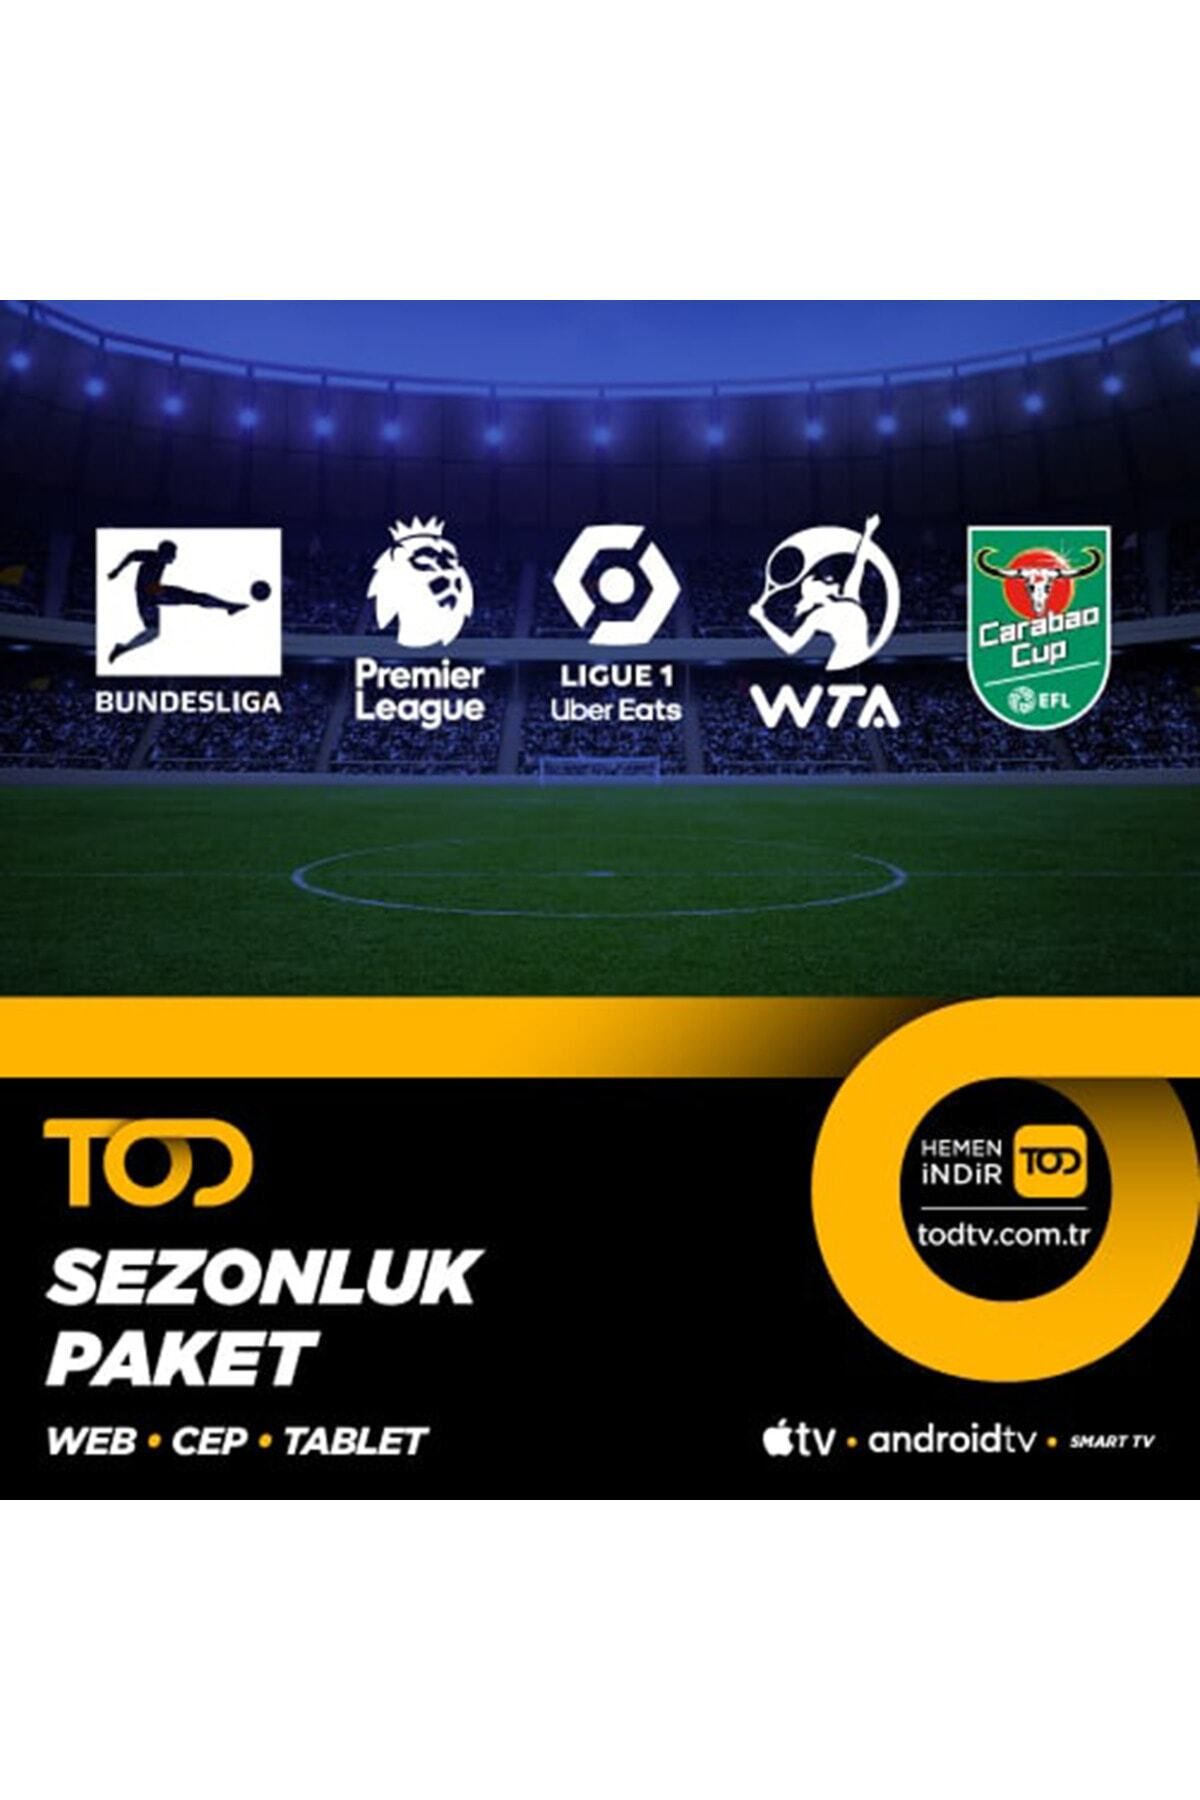 TOD TV Sezonluk Spor Extra+ Paketi - (web + Cep + Tablet + Smart Tv)